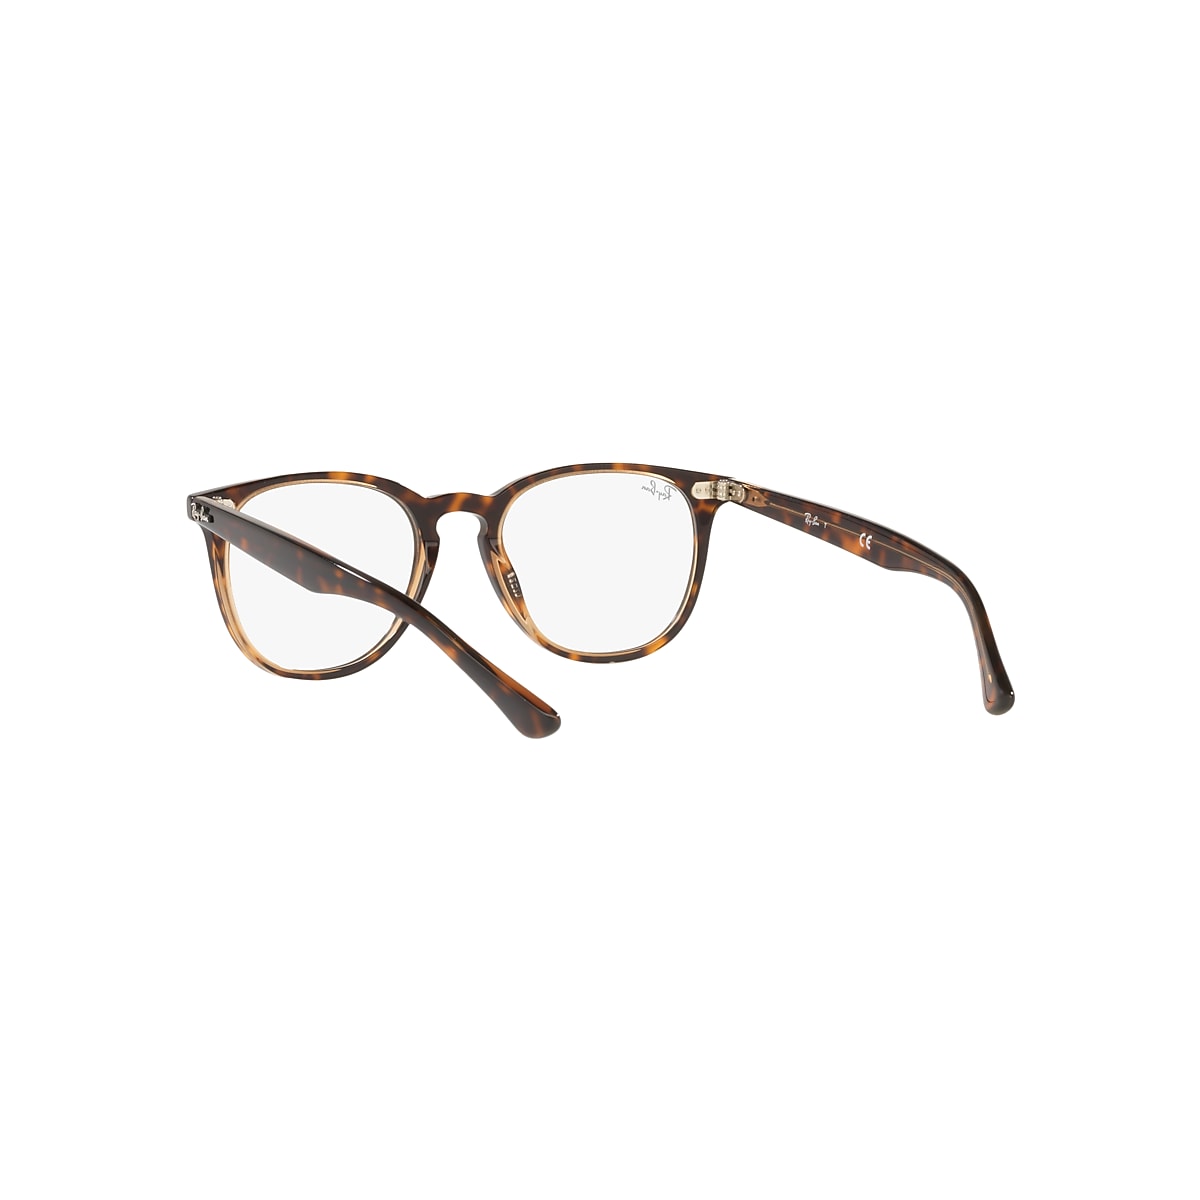 Rb7159 Optics Eyeglasses with Havana On Transparent Brown Frame | Ray-Ban®